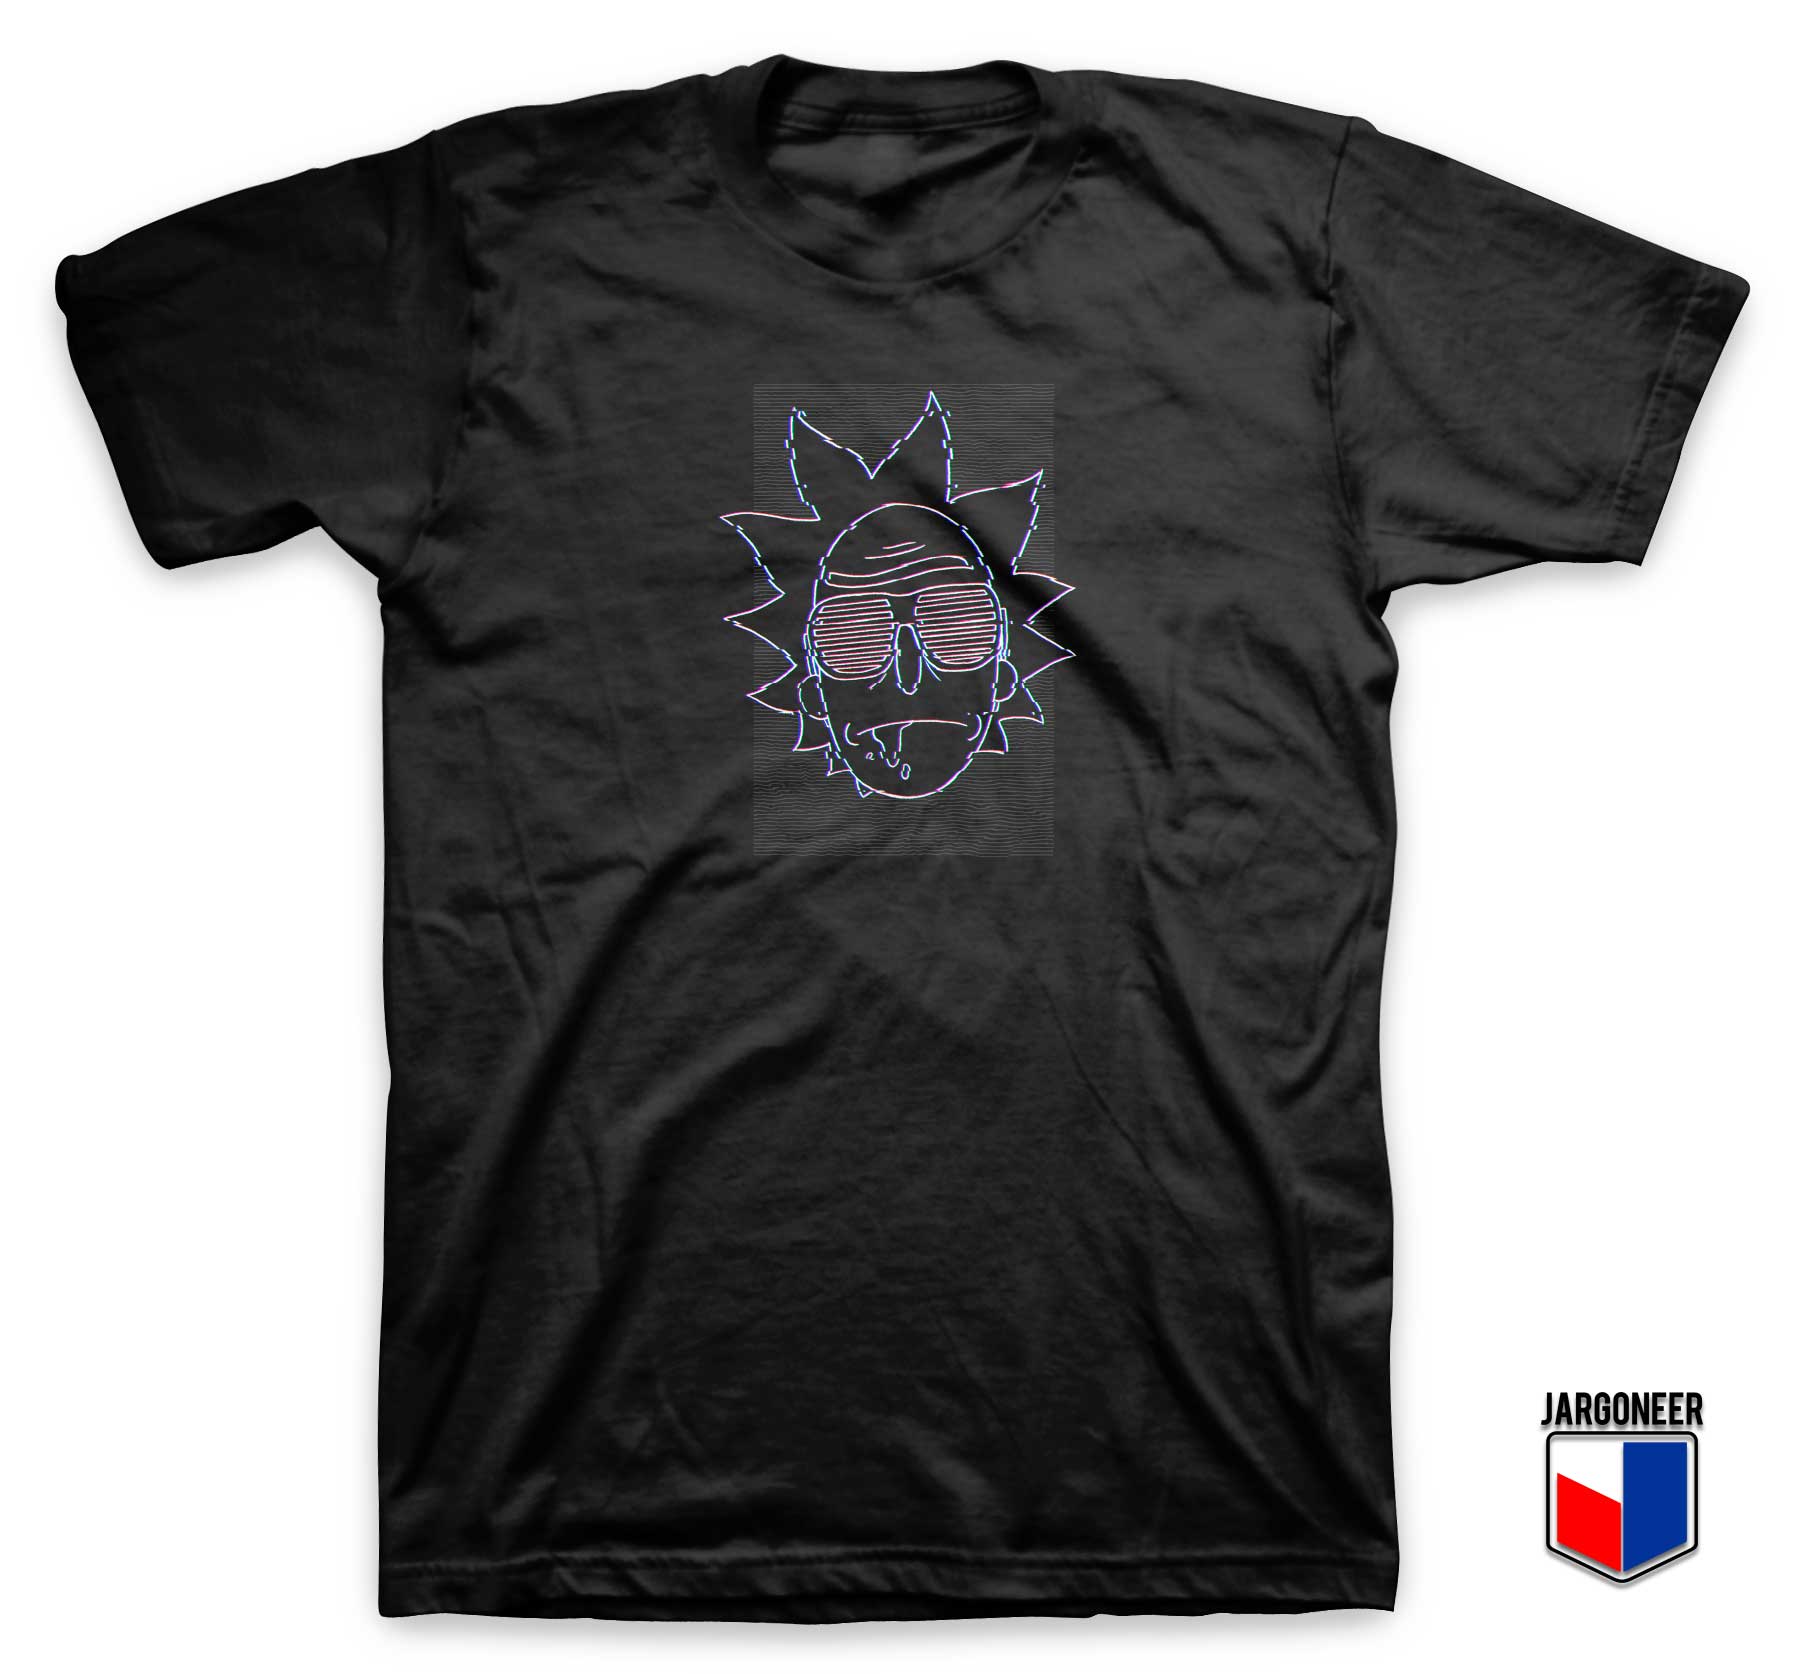 Schwifty Wubba Lubba T Shirt - Shop Unique Graphic Cool Shirt Designs